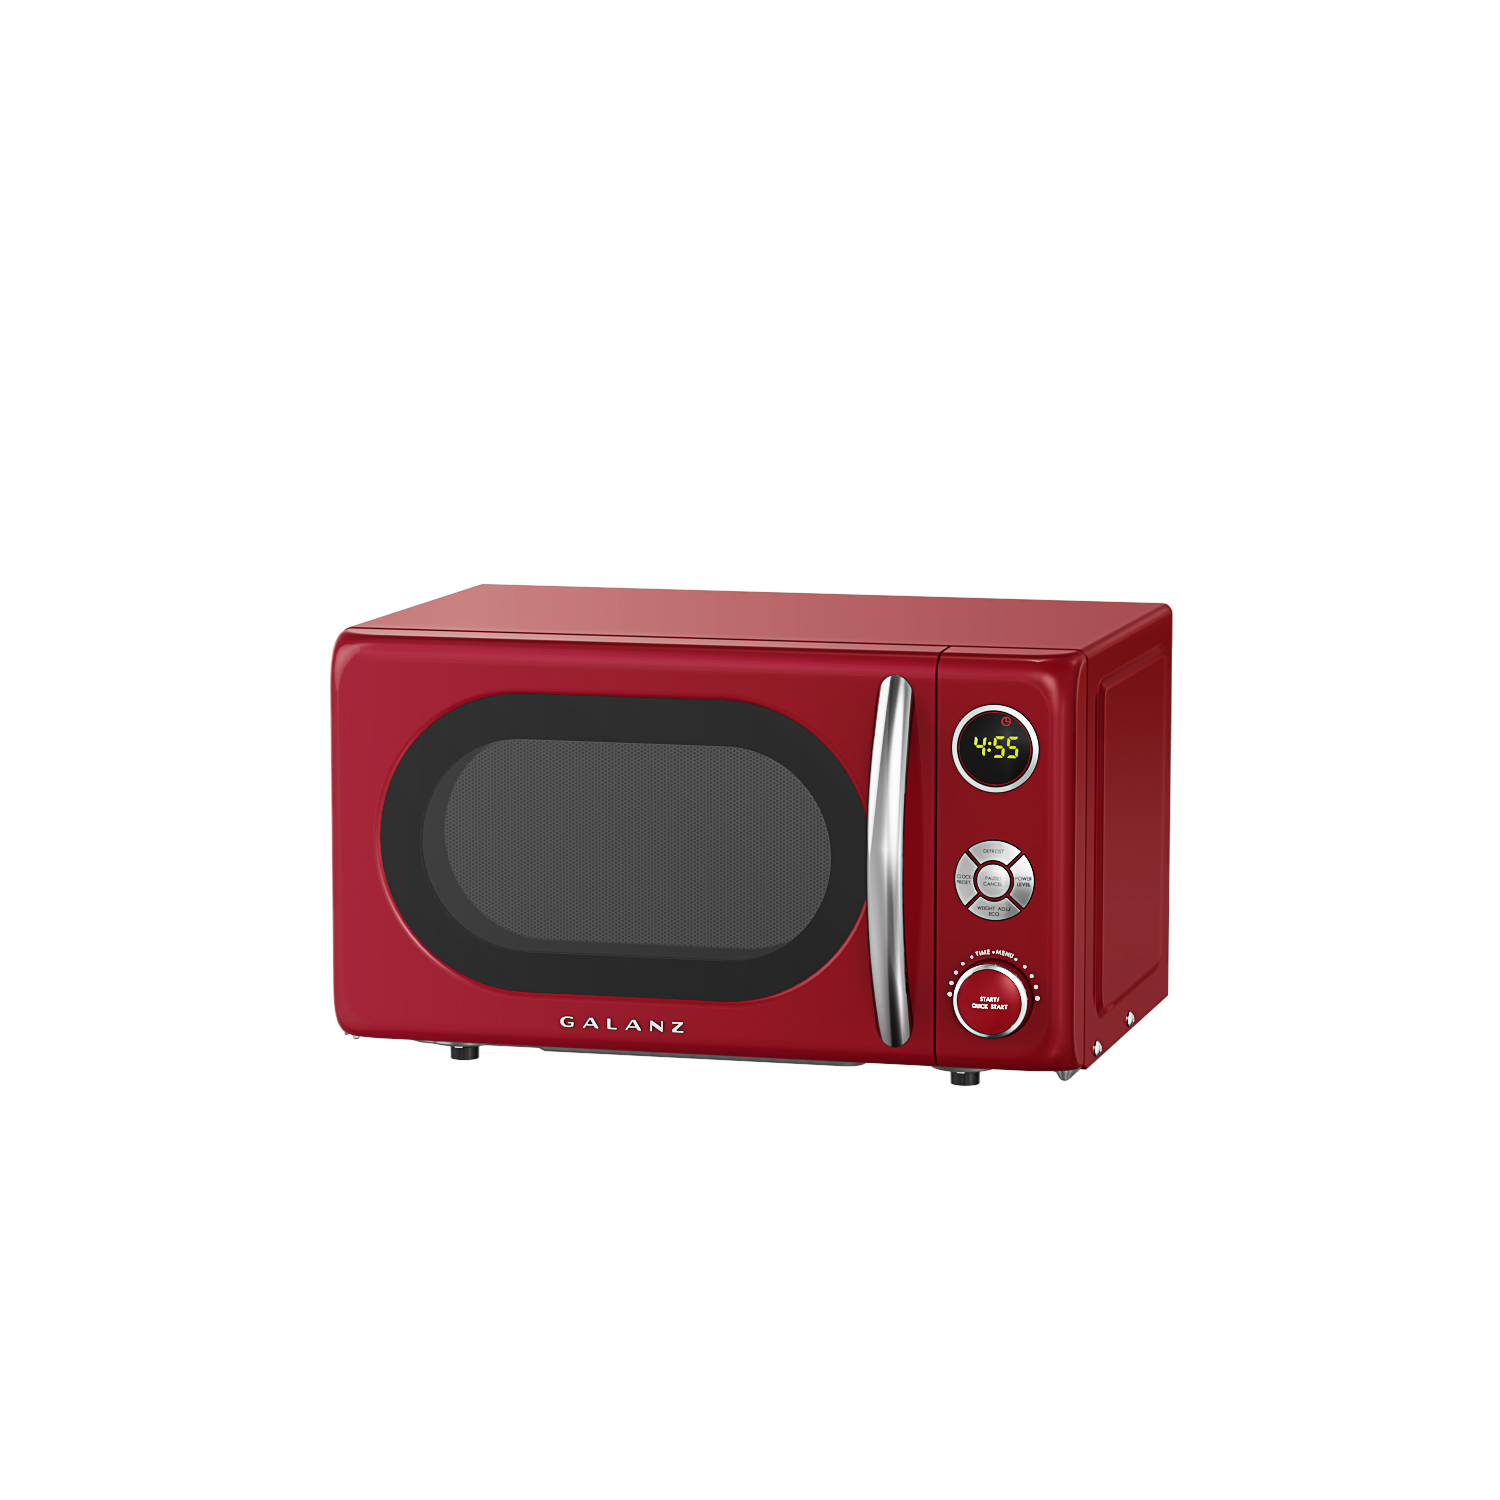 GLCMKA07BKR-07 Retro Microwave – Galanz – Thoughtful Engineering